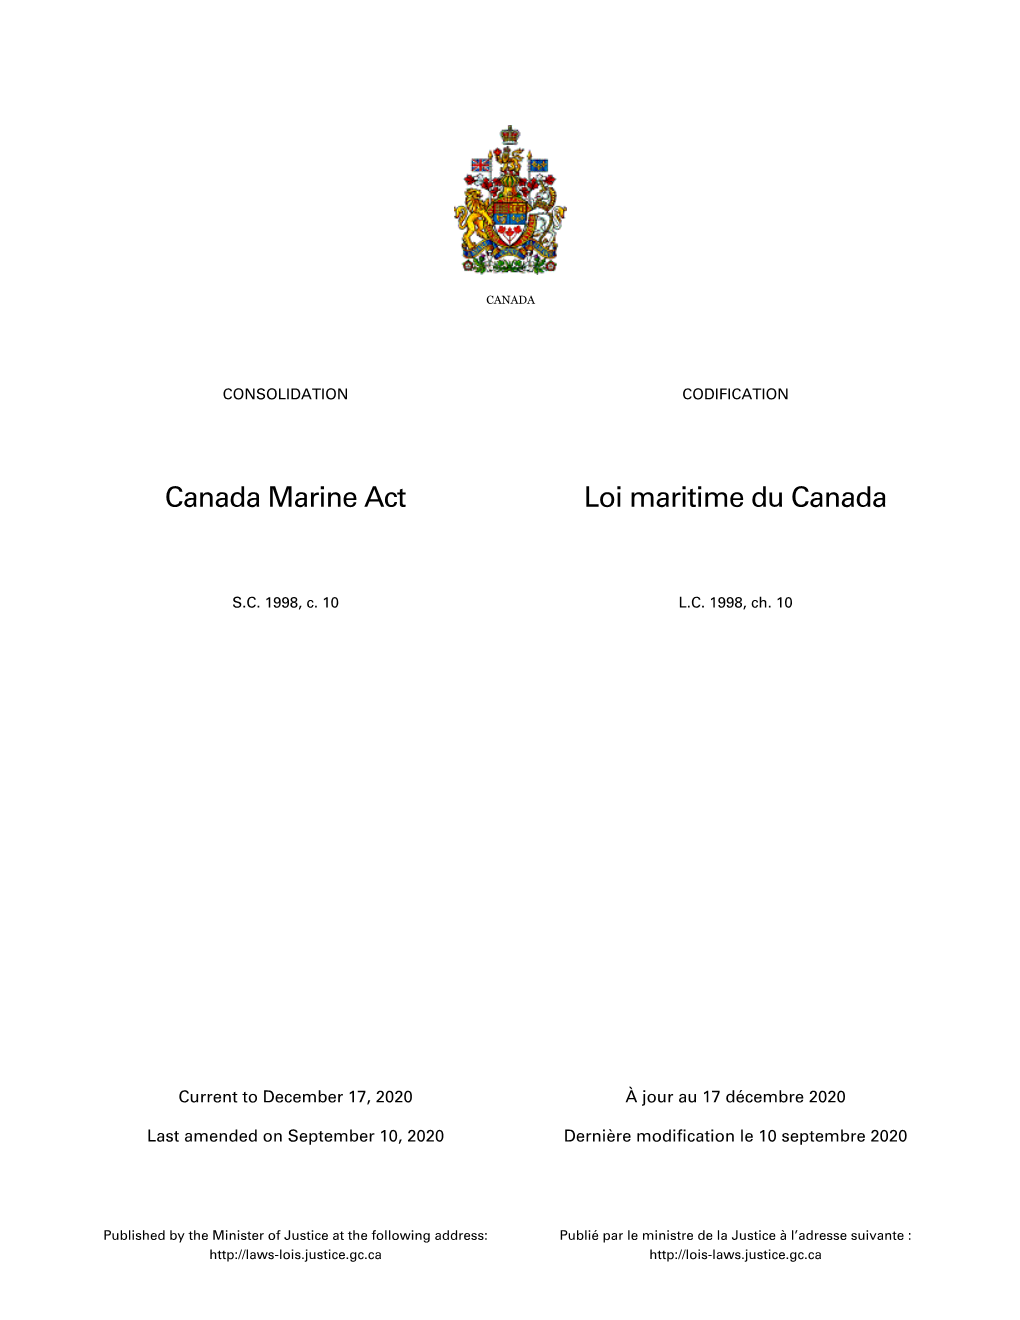 Canada Marine Act Loi Maritime Du Canada